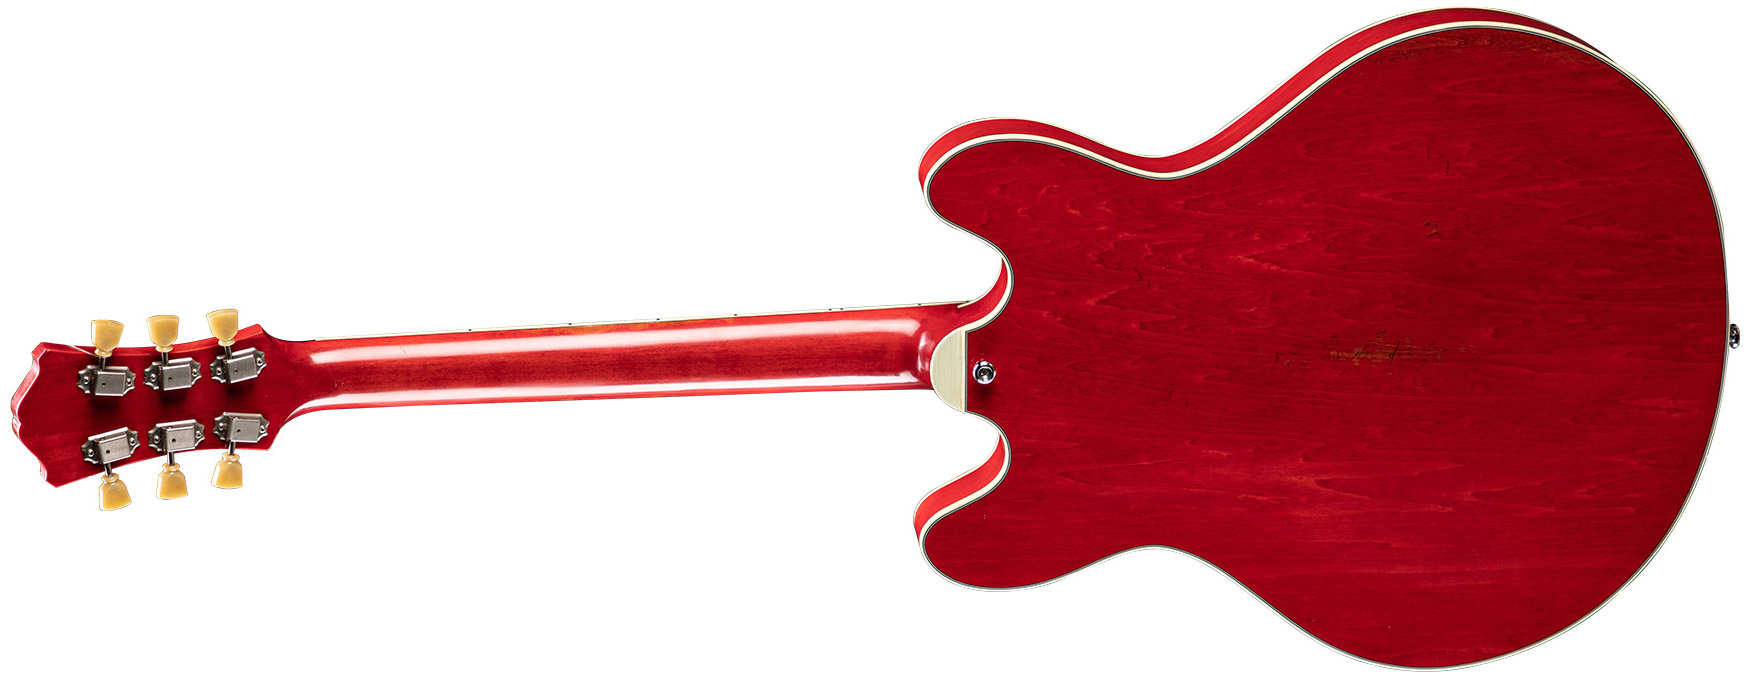 Eastman T64/v Thinline Laminate Tout Erable 2p90 Lollar Ht Eb - Antique Red - Semi-hollow electric guitar - Variation 1